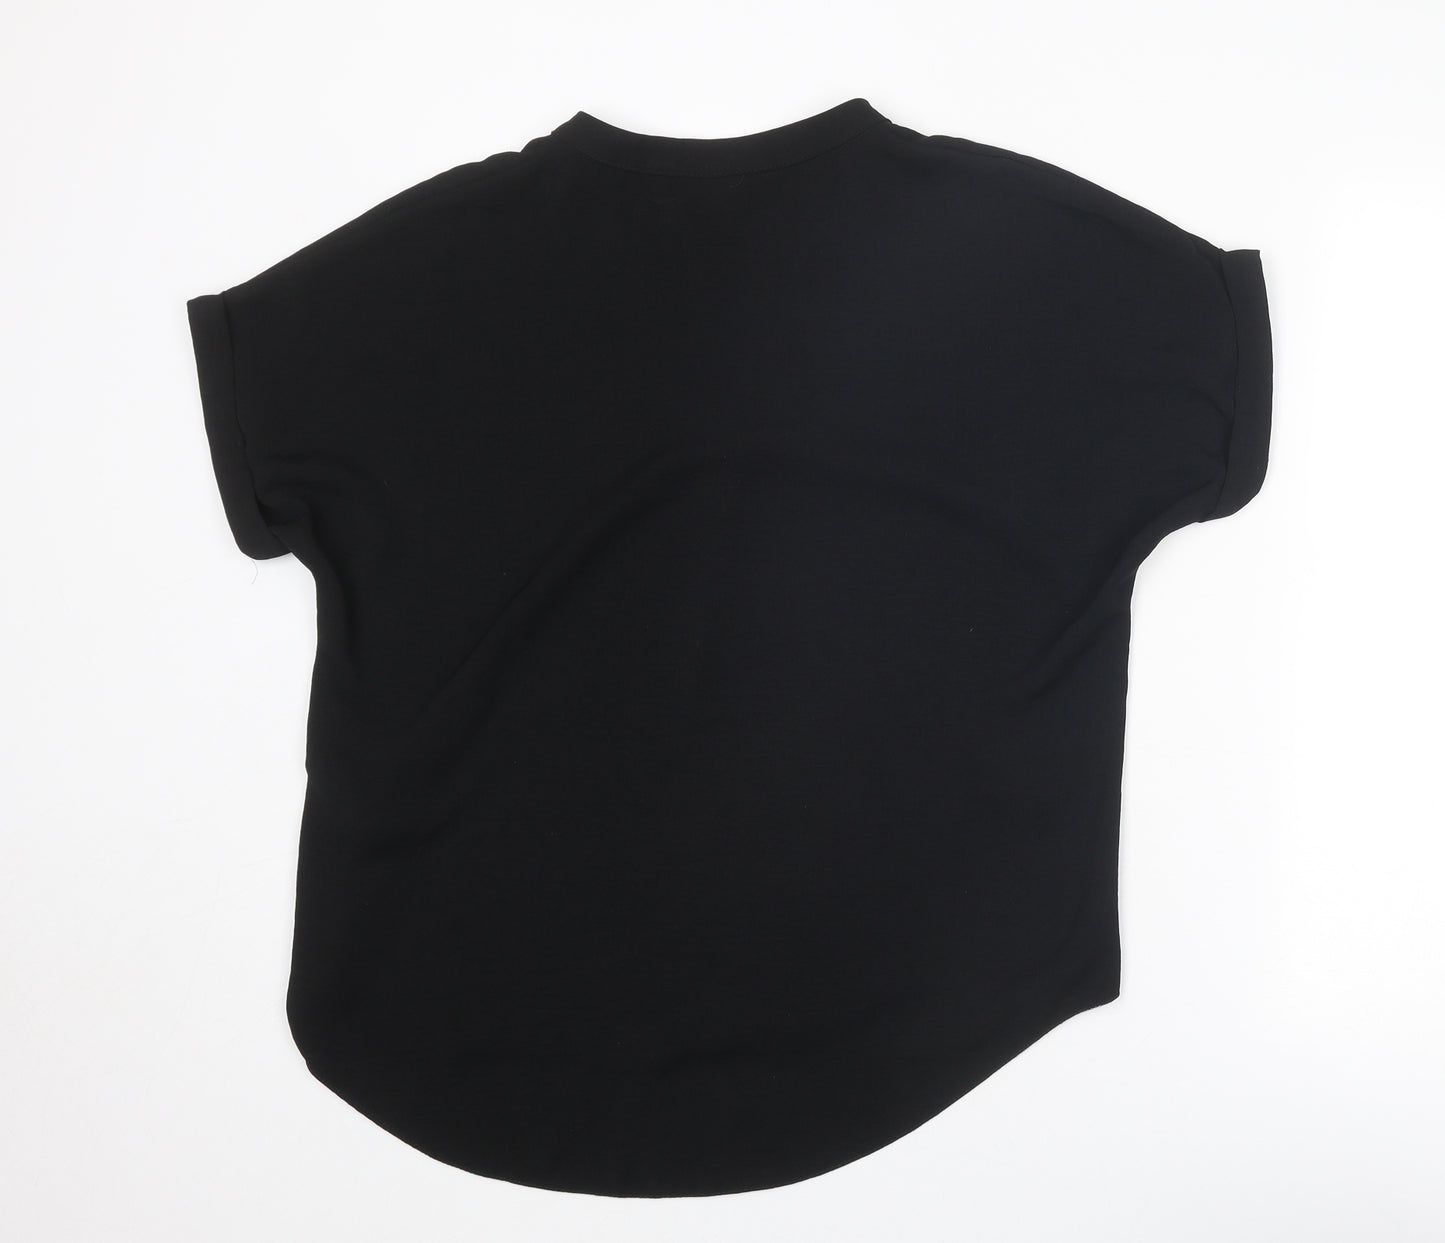 New Look Womens Black Polyester Basic T-Shirt Size 16 V-Neck